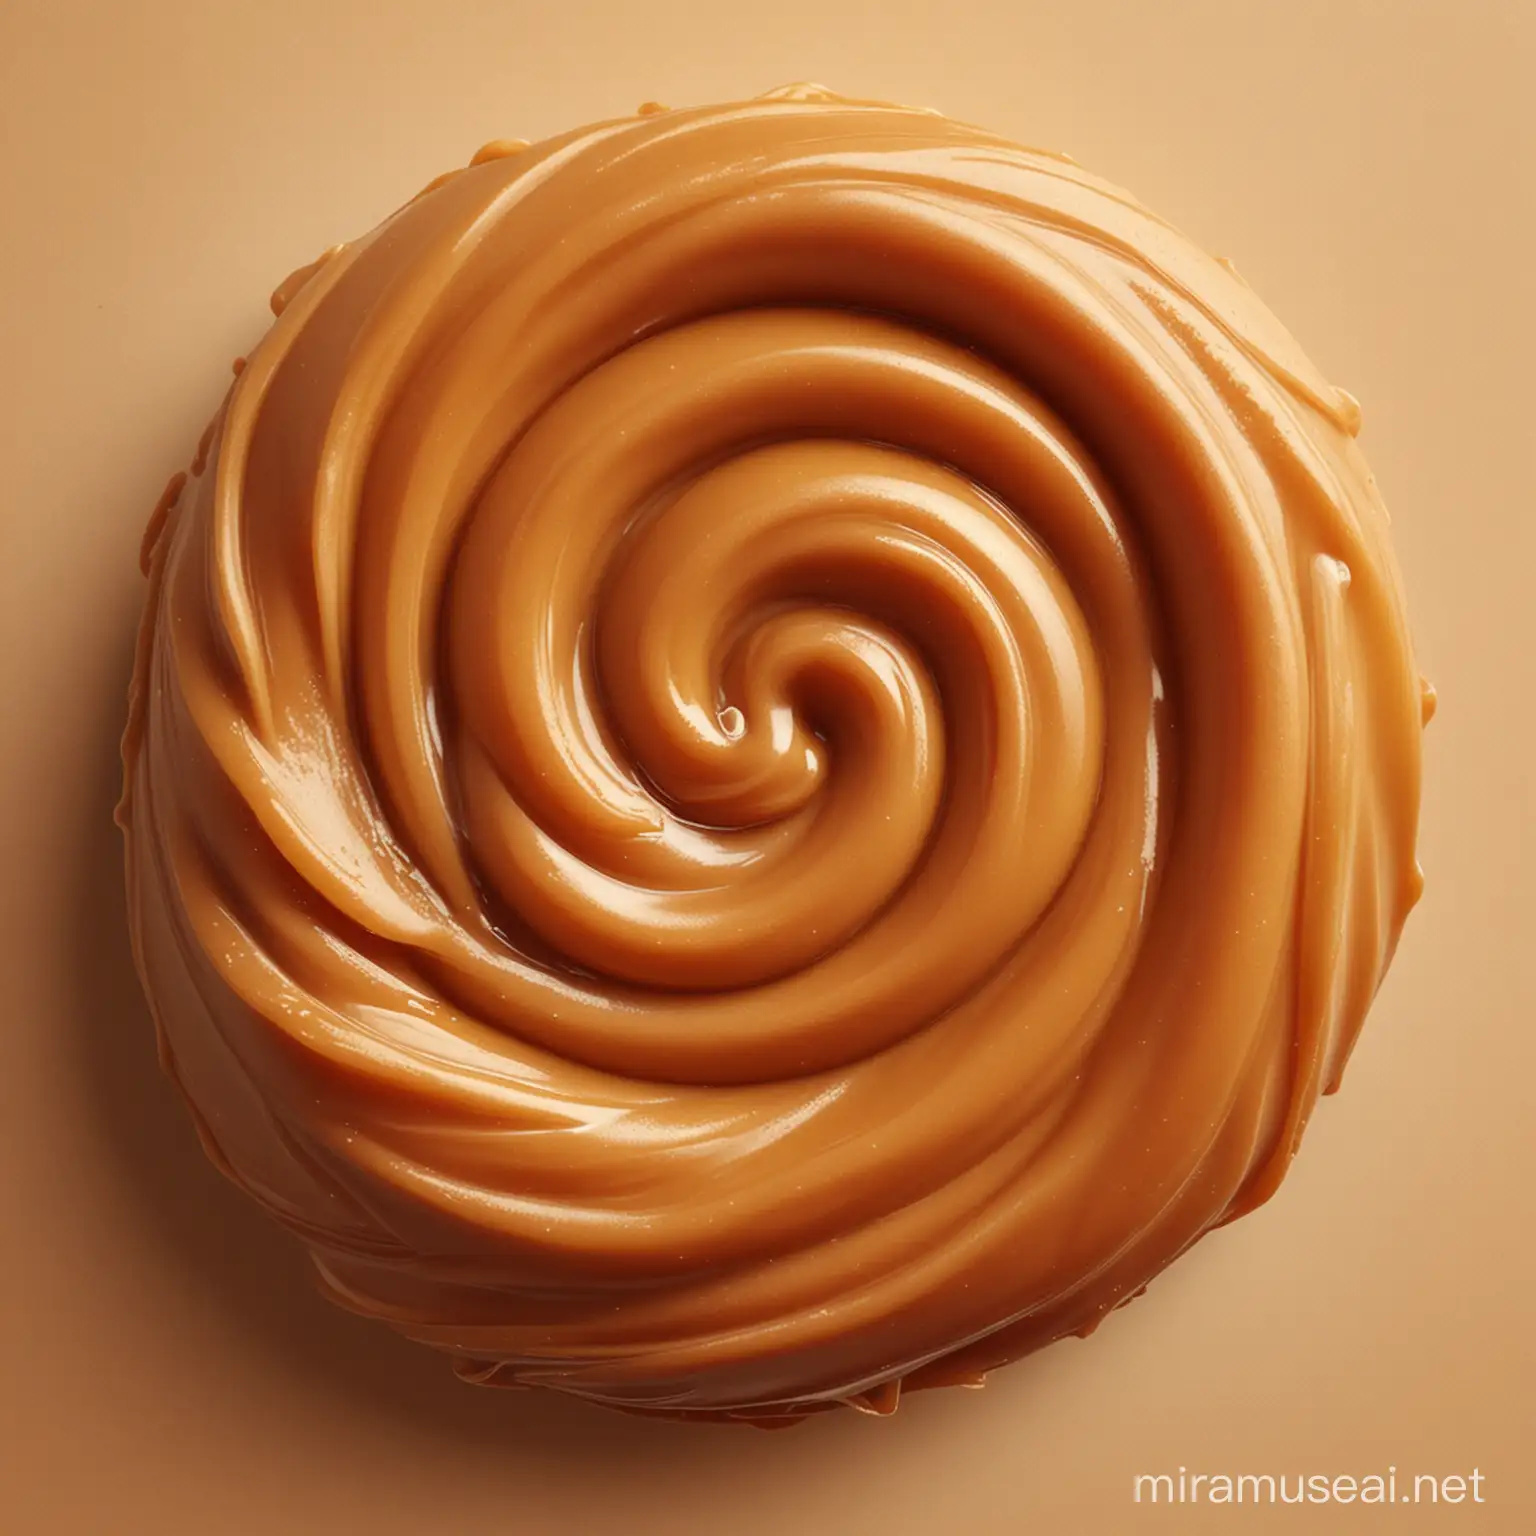 caramel swirl illustration